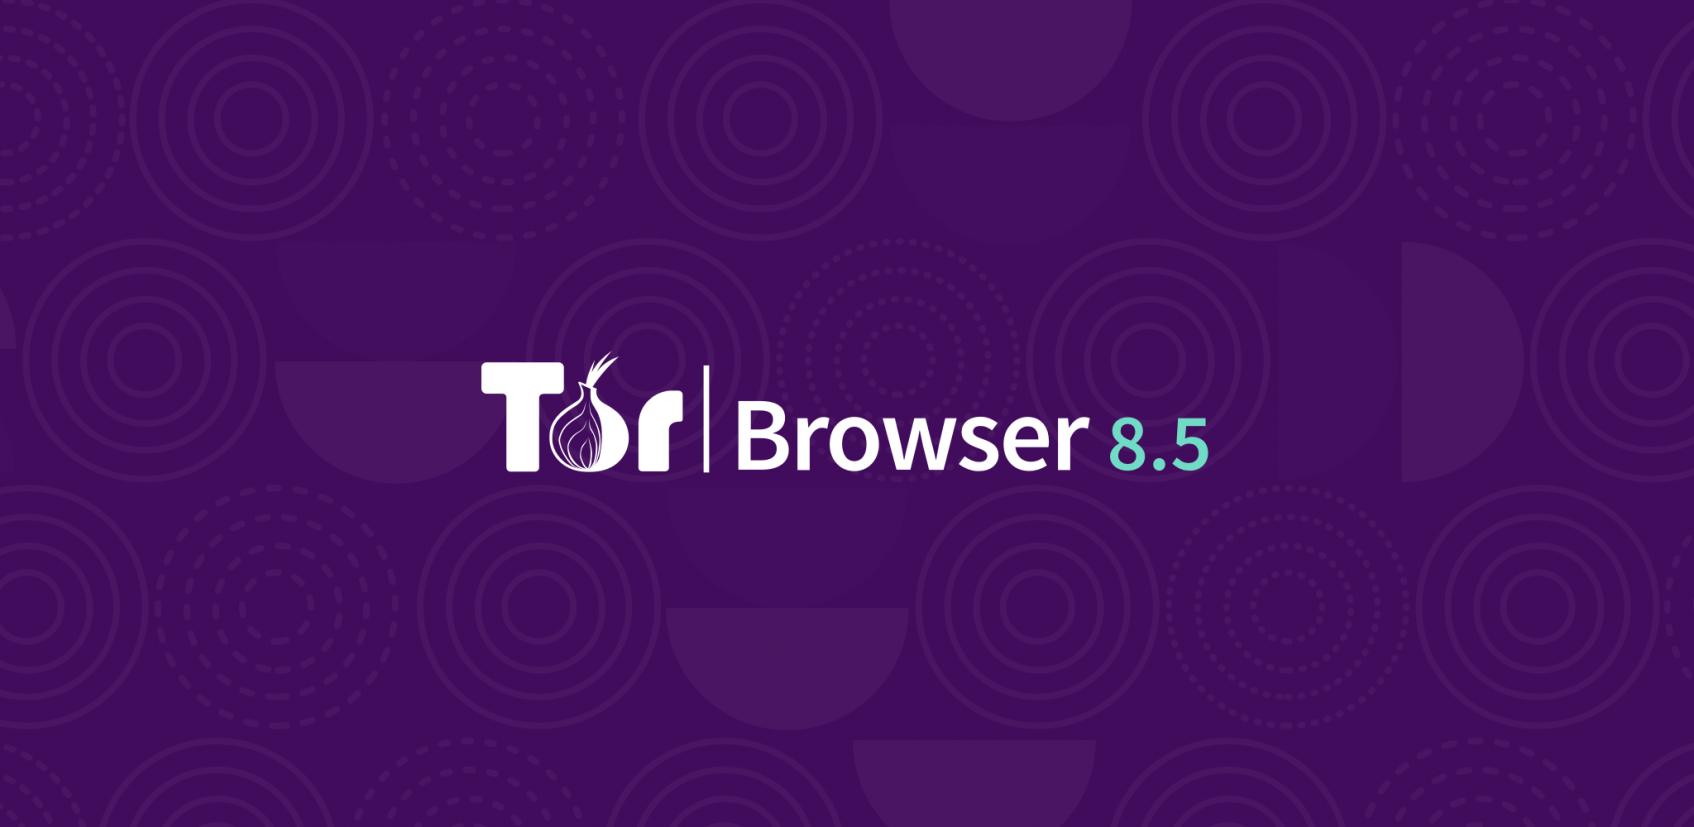 orfox tor browser free download apk